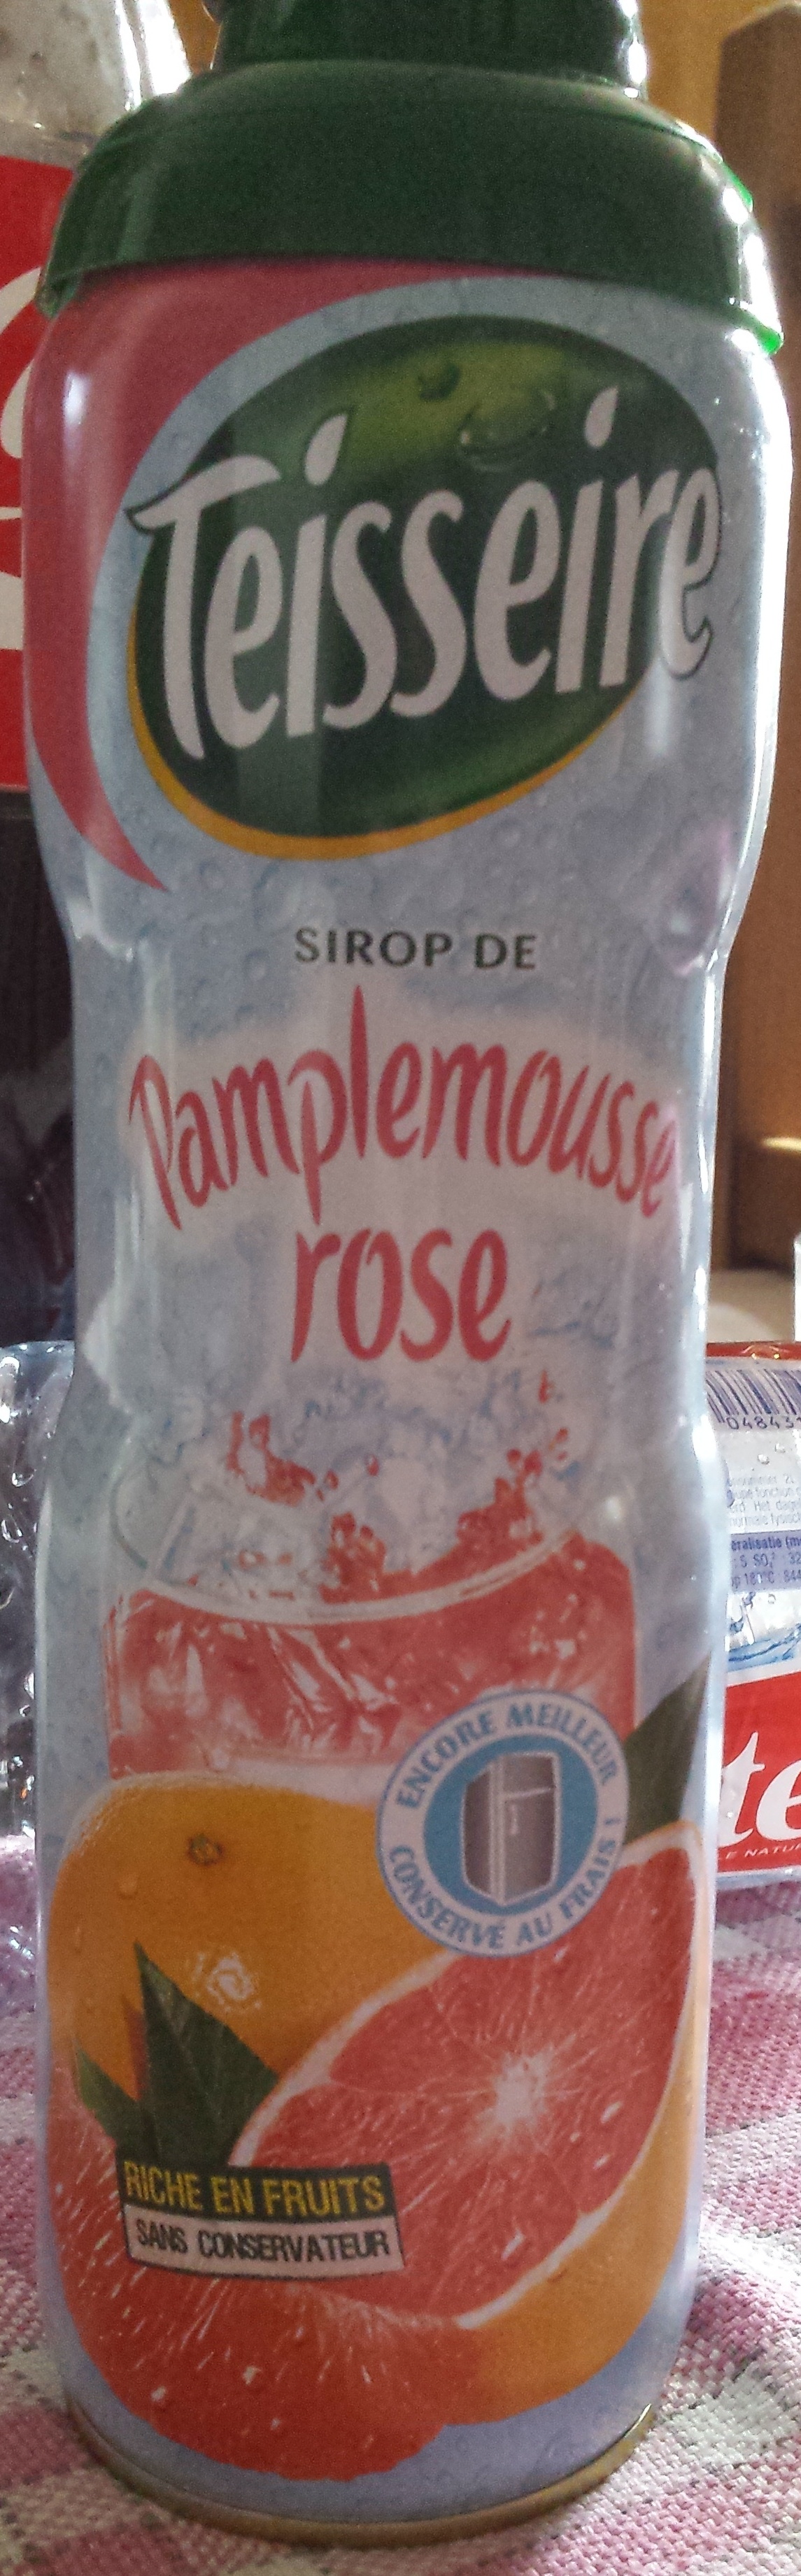 Sirop de pamplemousse rose - Product - fr